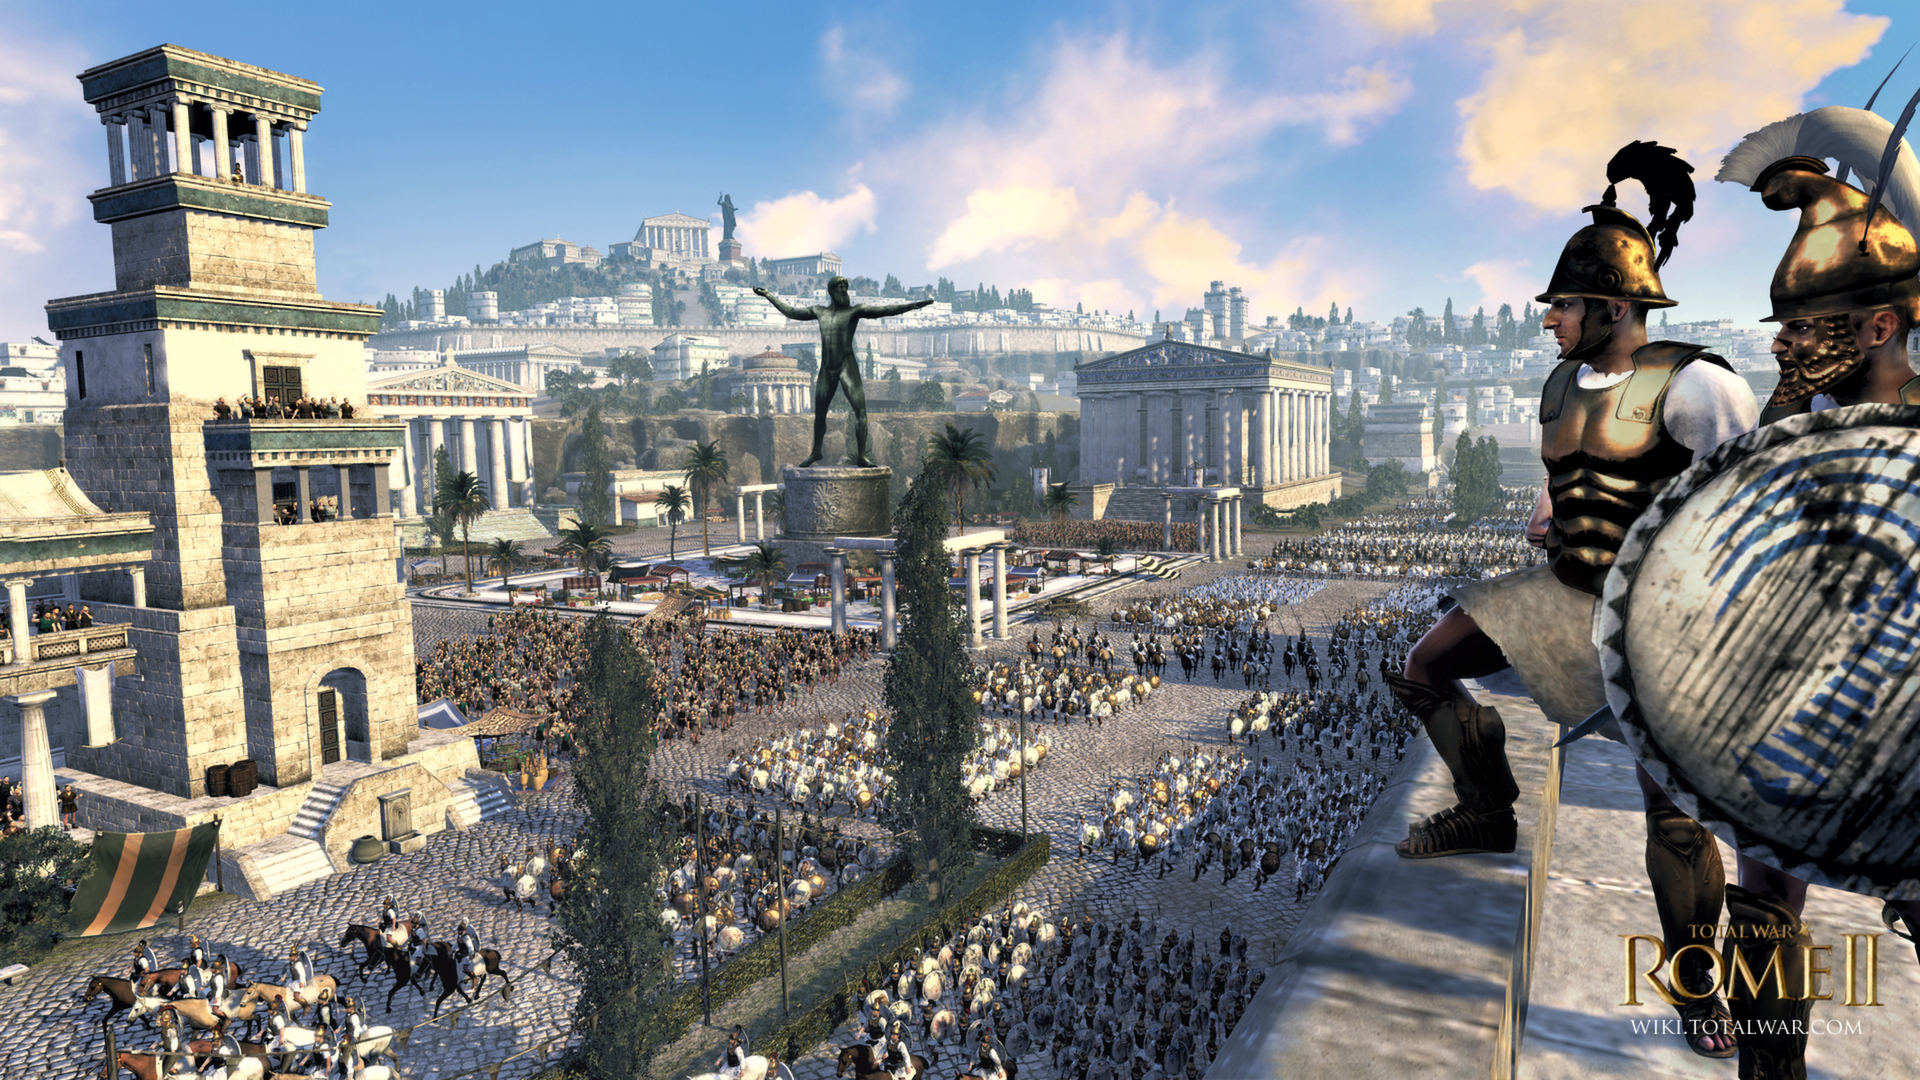 Total War ROME II - Emperor Edition Images 